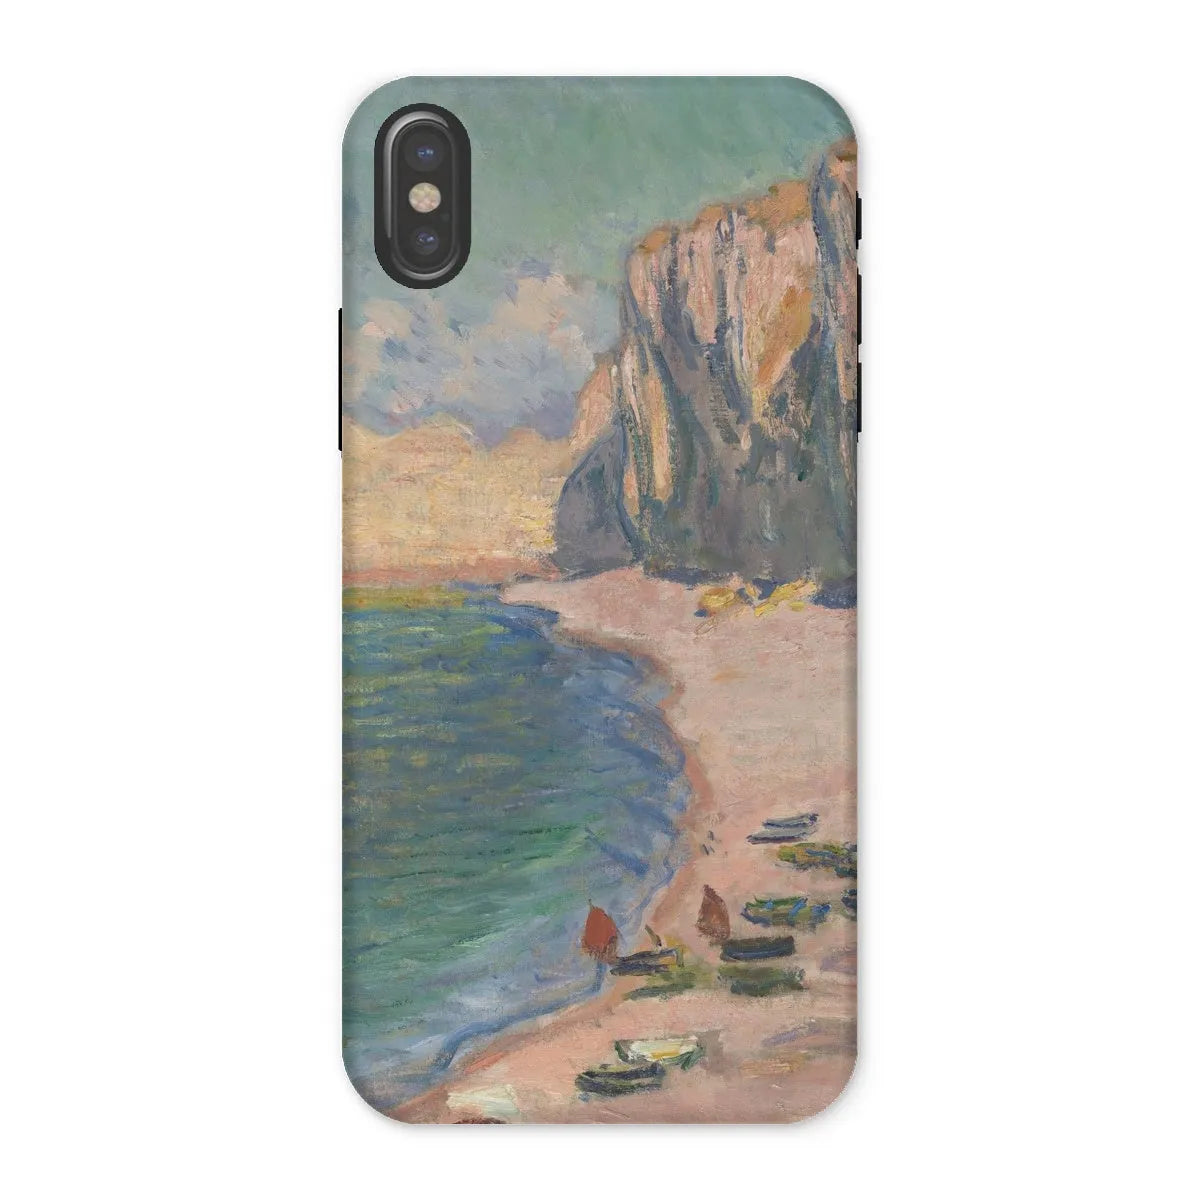 étretat - Impressionist Art Phone Case - Claude Monet - Iphone x / Matte - Mobile Phone Cases - Aesthetic Art